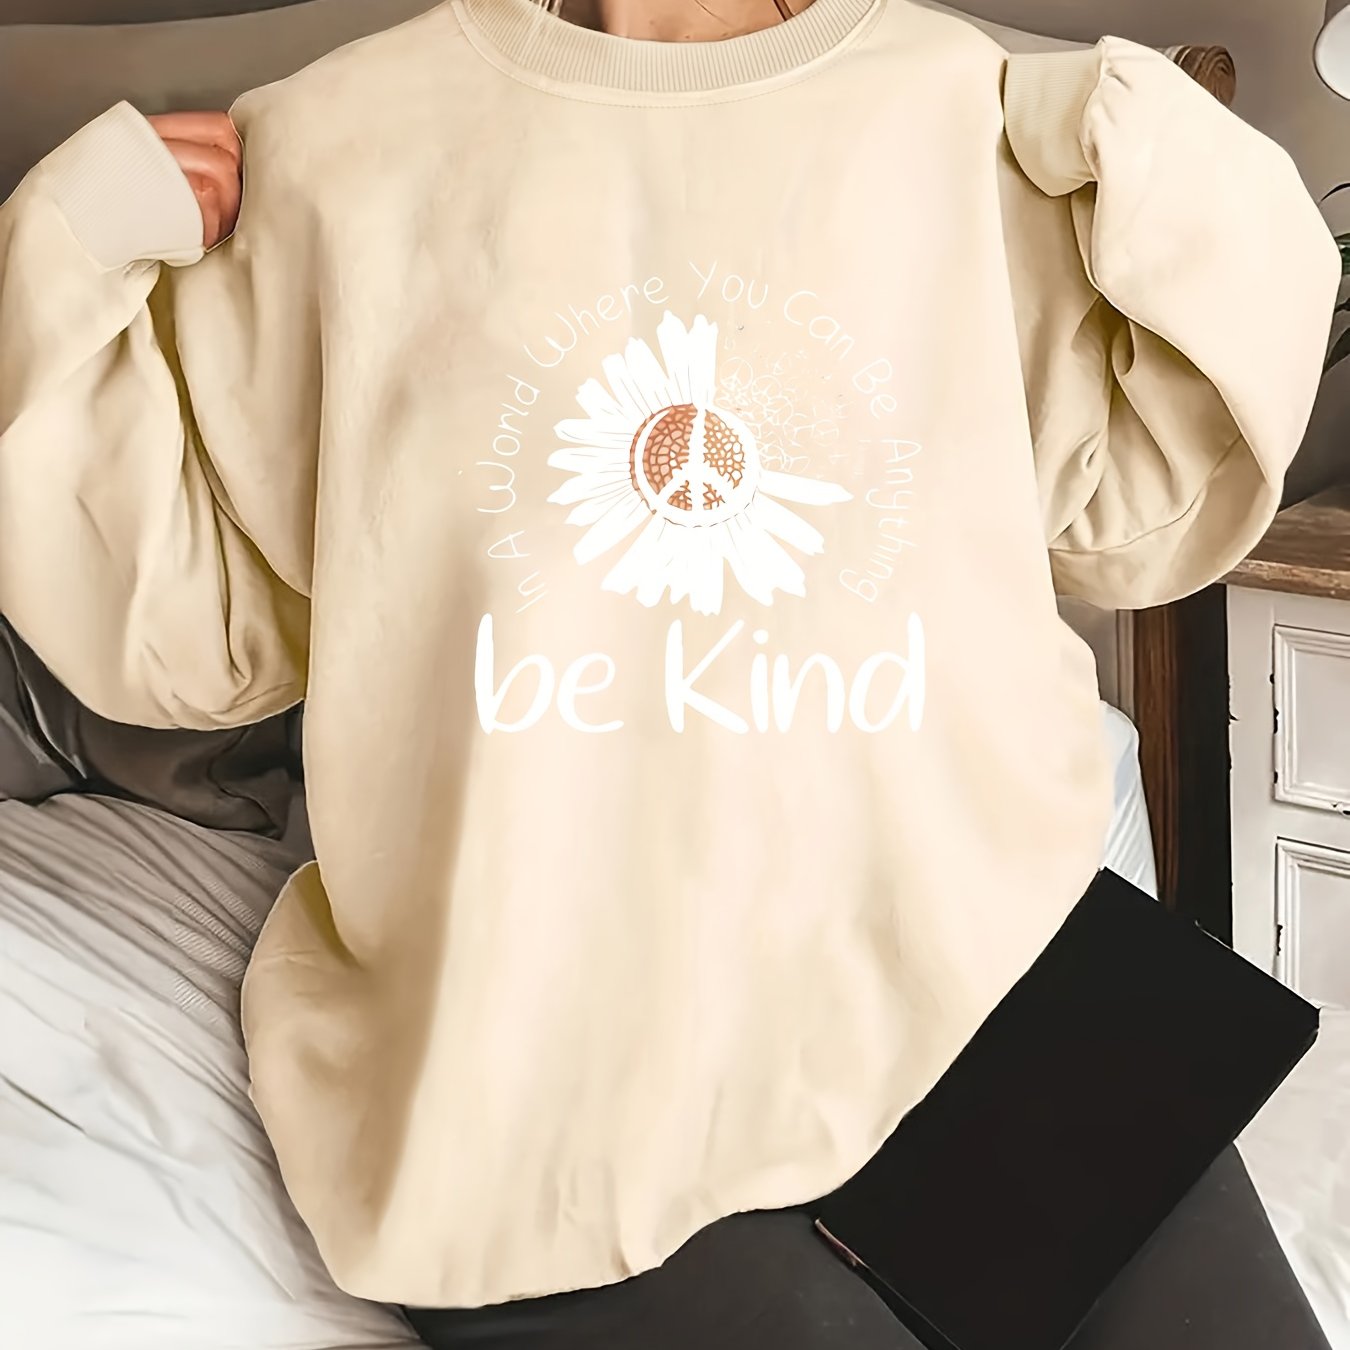 Be kind Sweatshirt